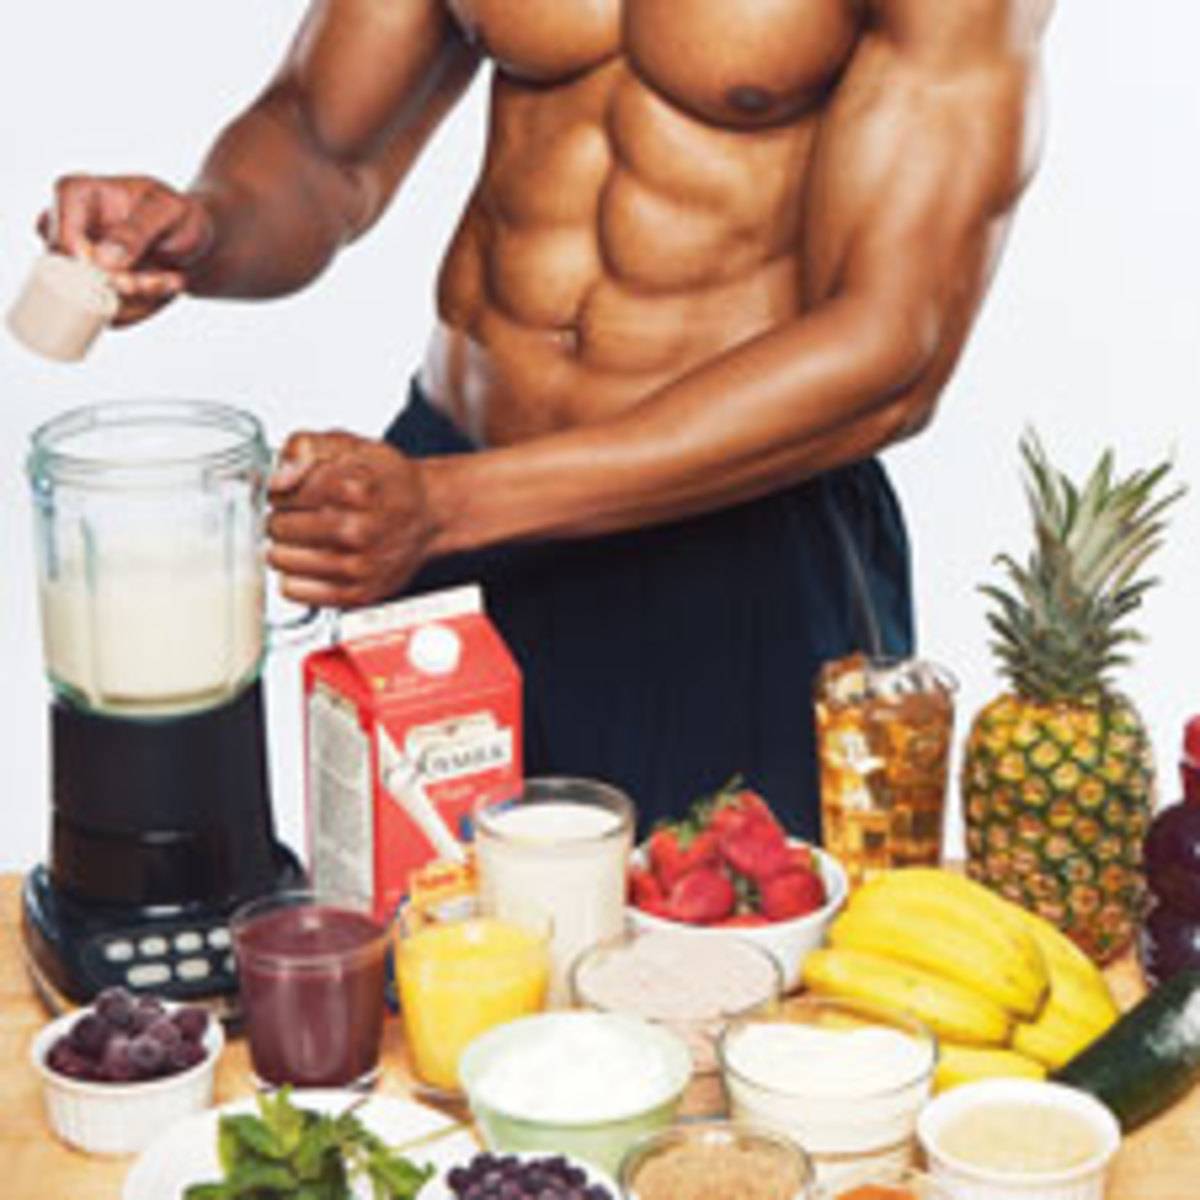 Протеин можно при похудении. Питание спортсменов. Спортивное питание. Спортивное питание коктейли. Спорт и еда.